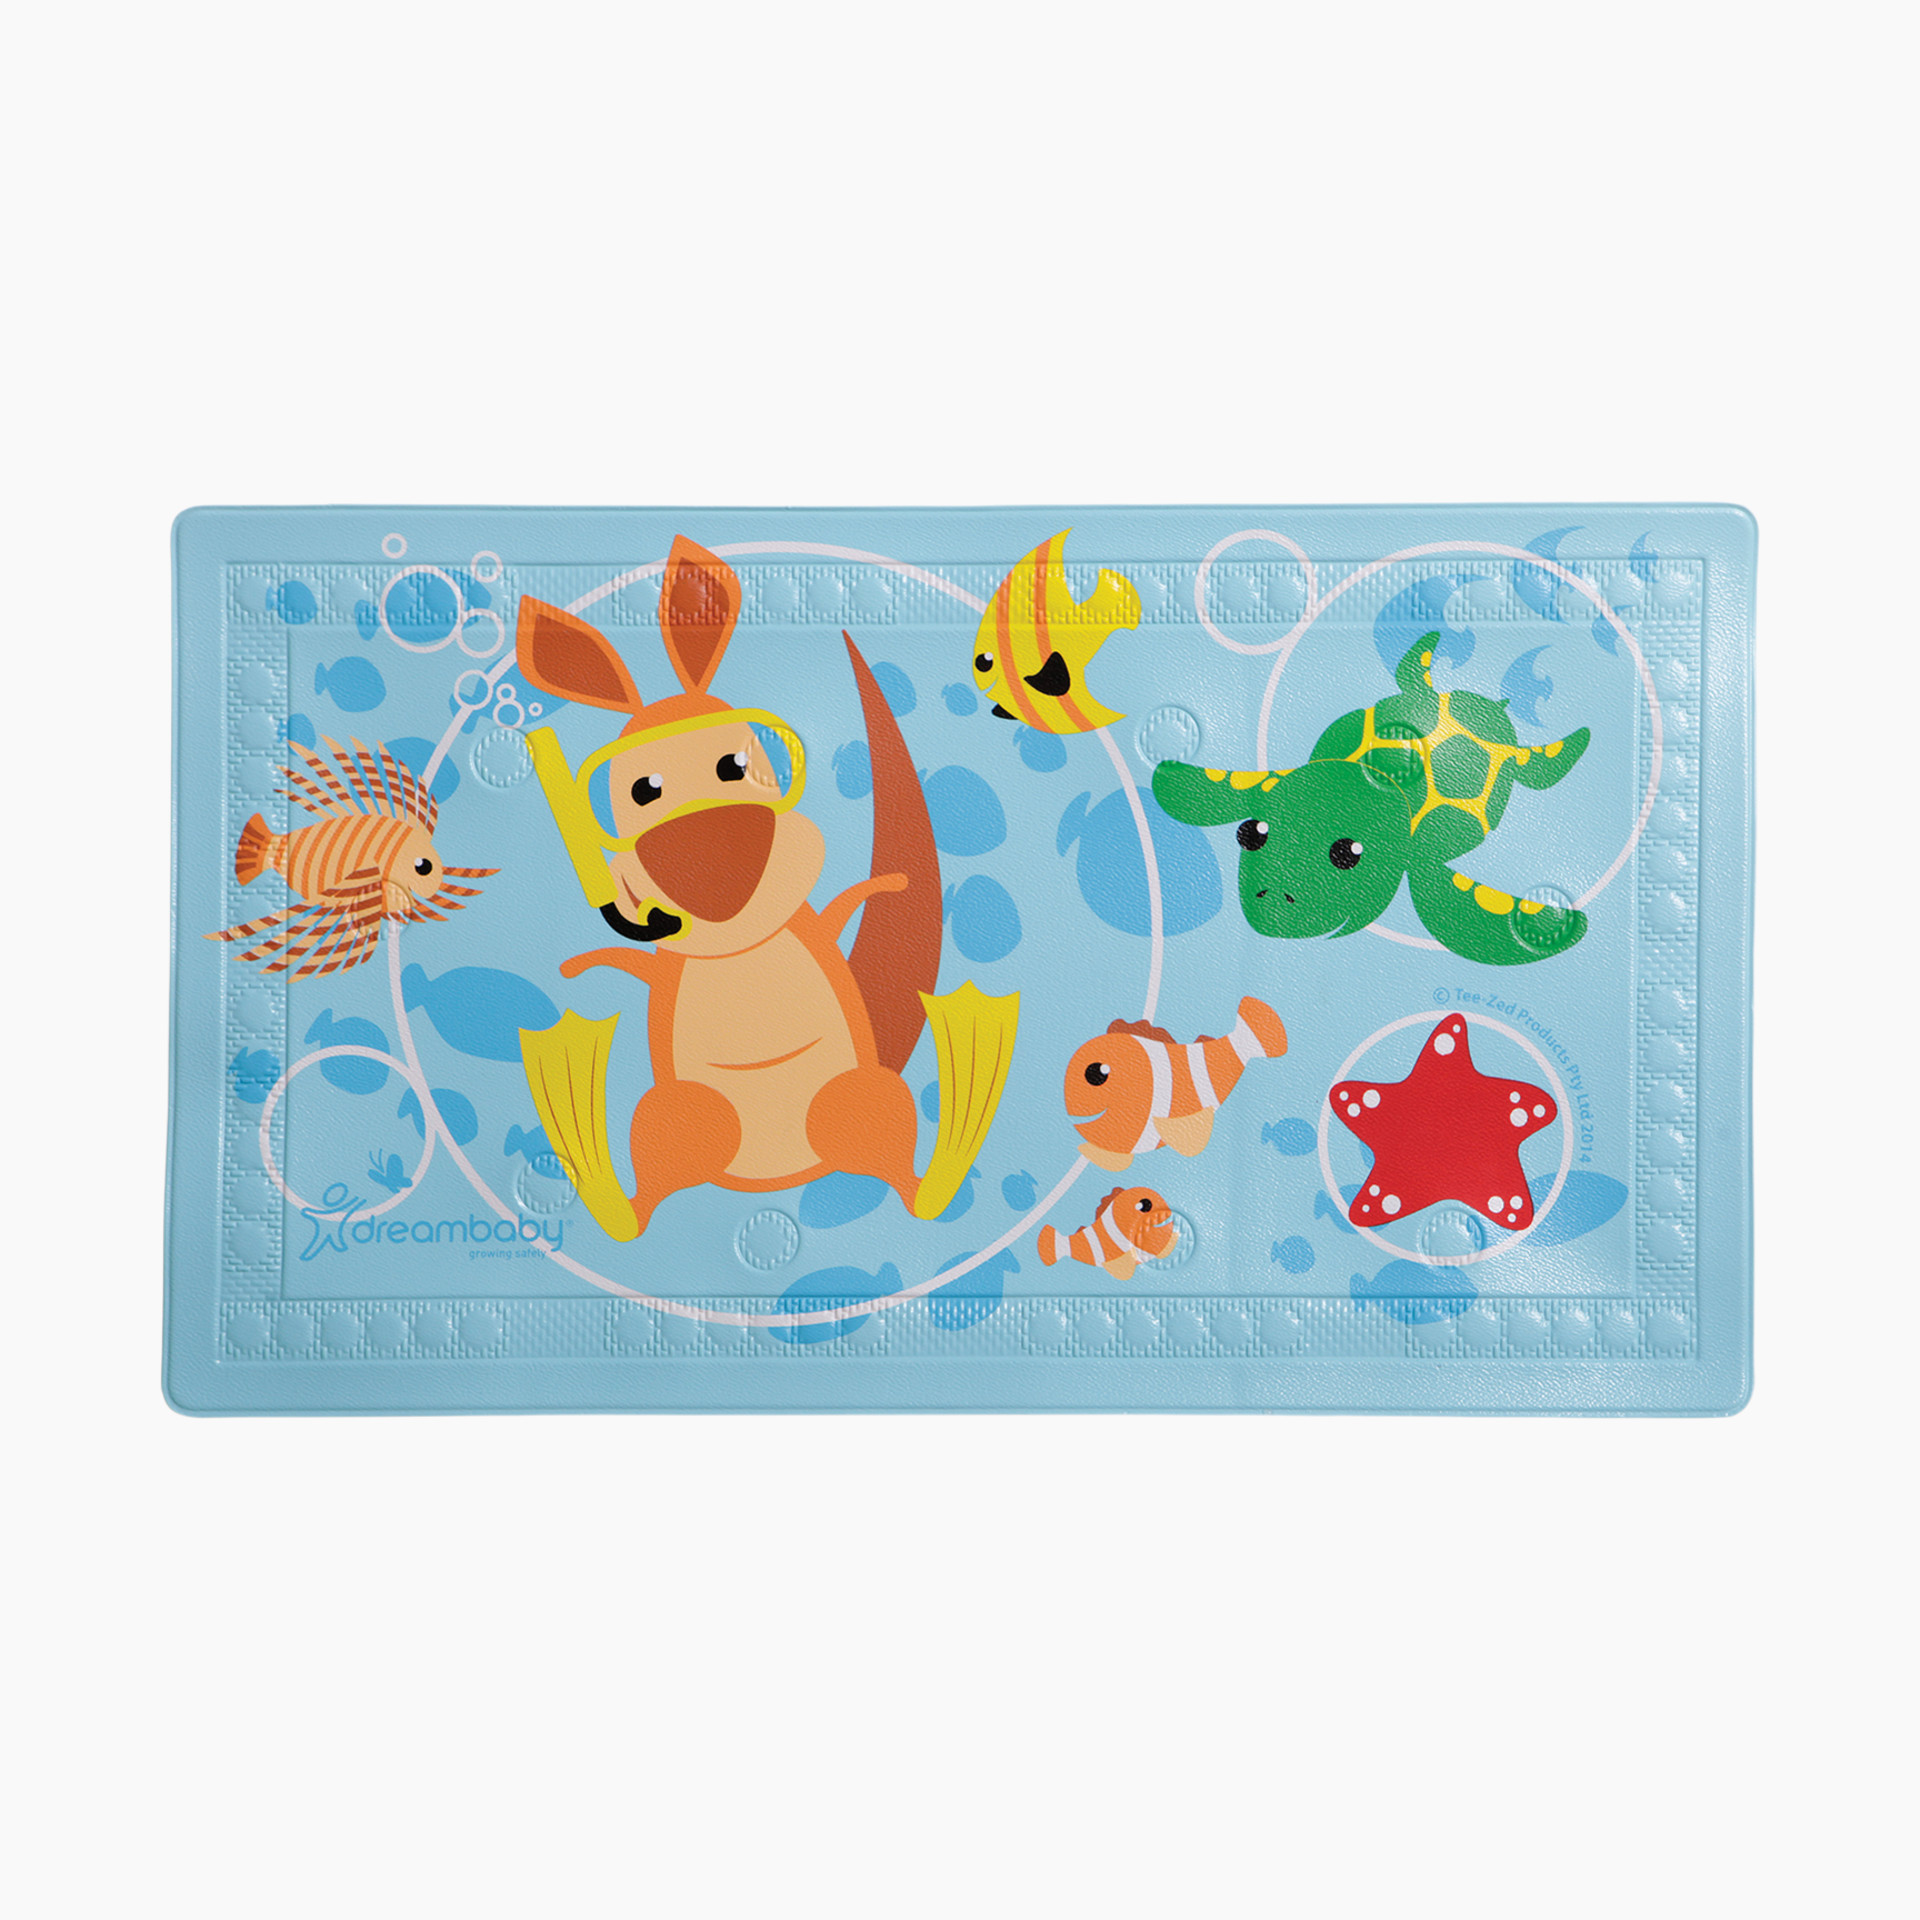 20 Pc Shower Mat Tub Sticker Anti-Slip Baby Bath Textured Animal Pads Non  Skid 